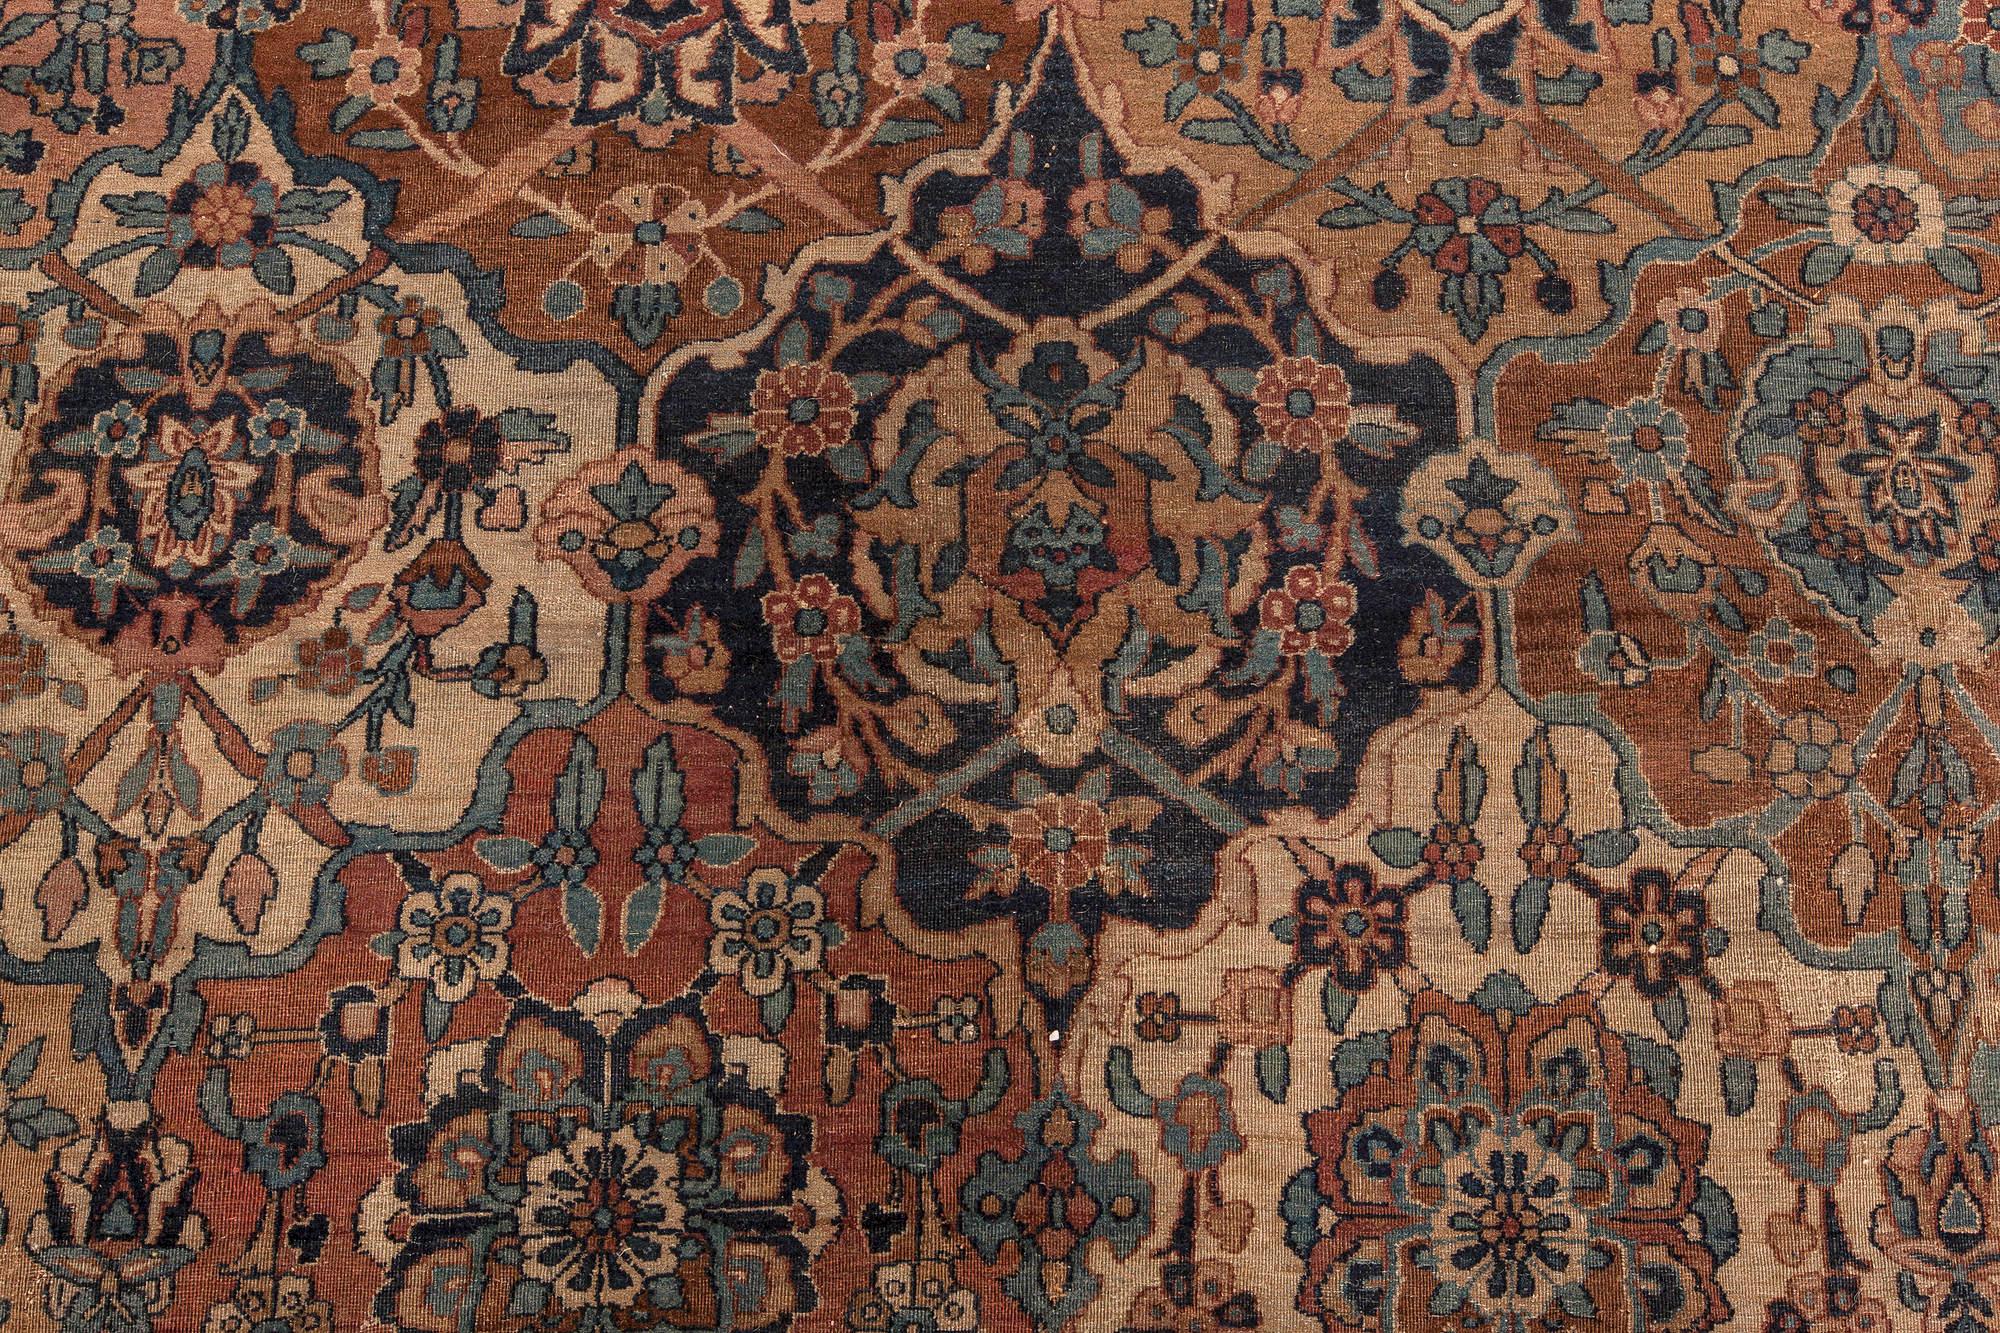 Antique Persian Kirman Botanic handmade wool rug
Size: 17'3